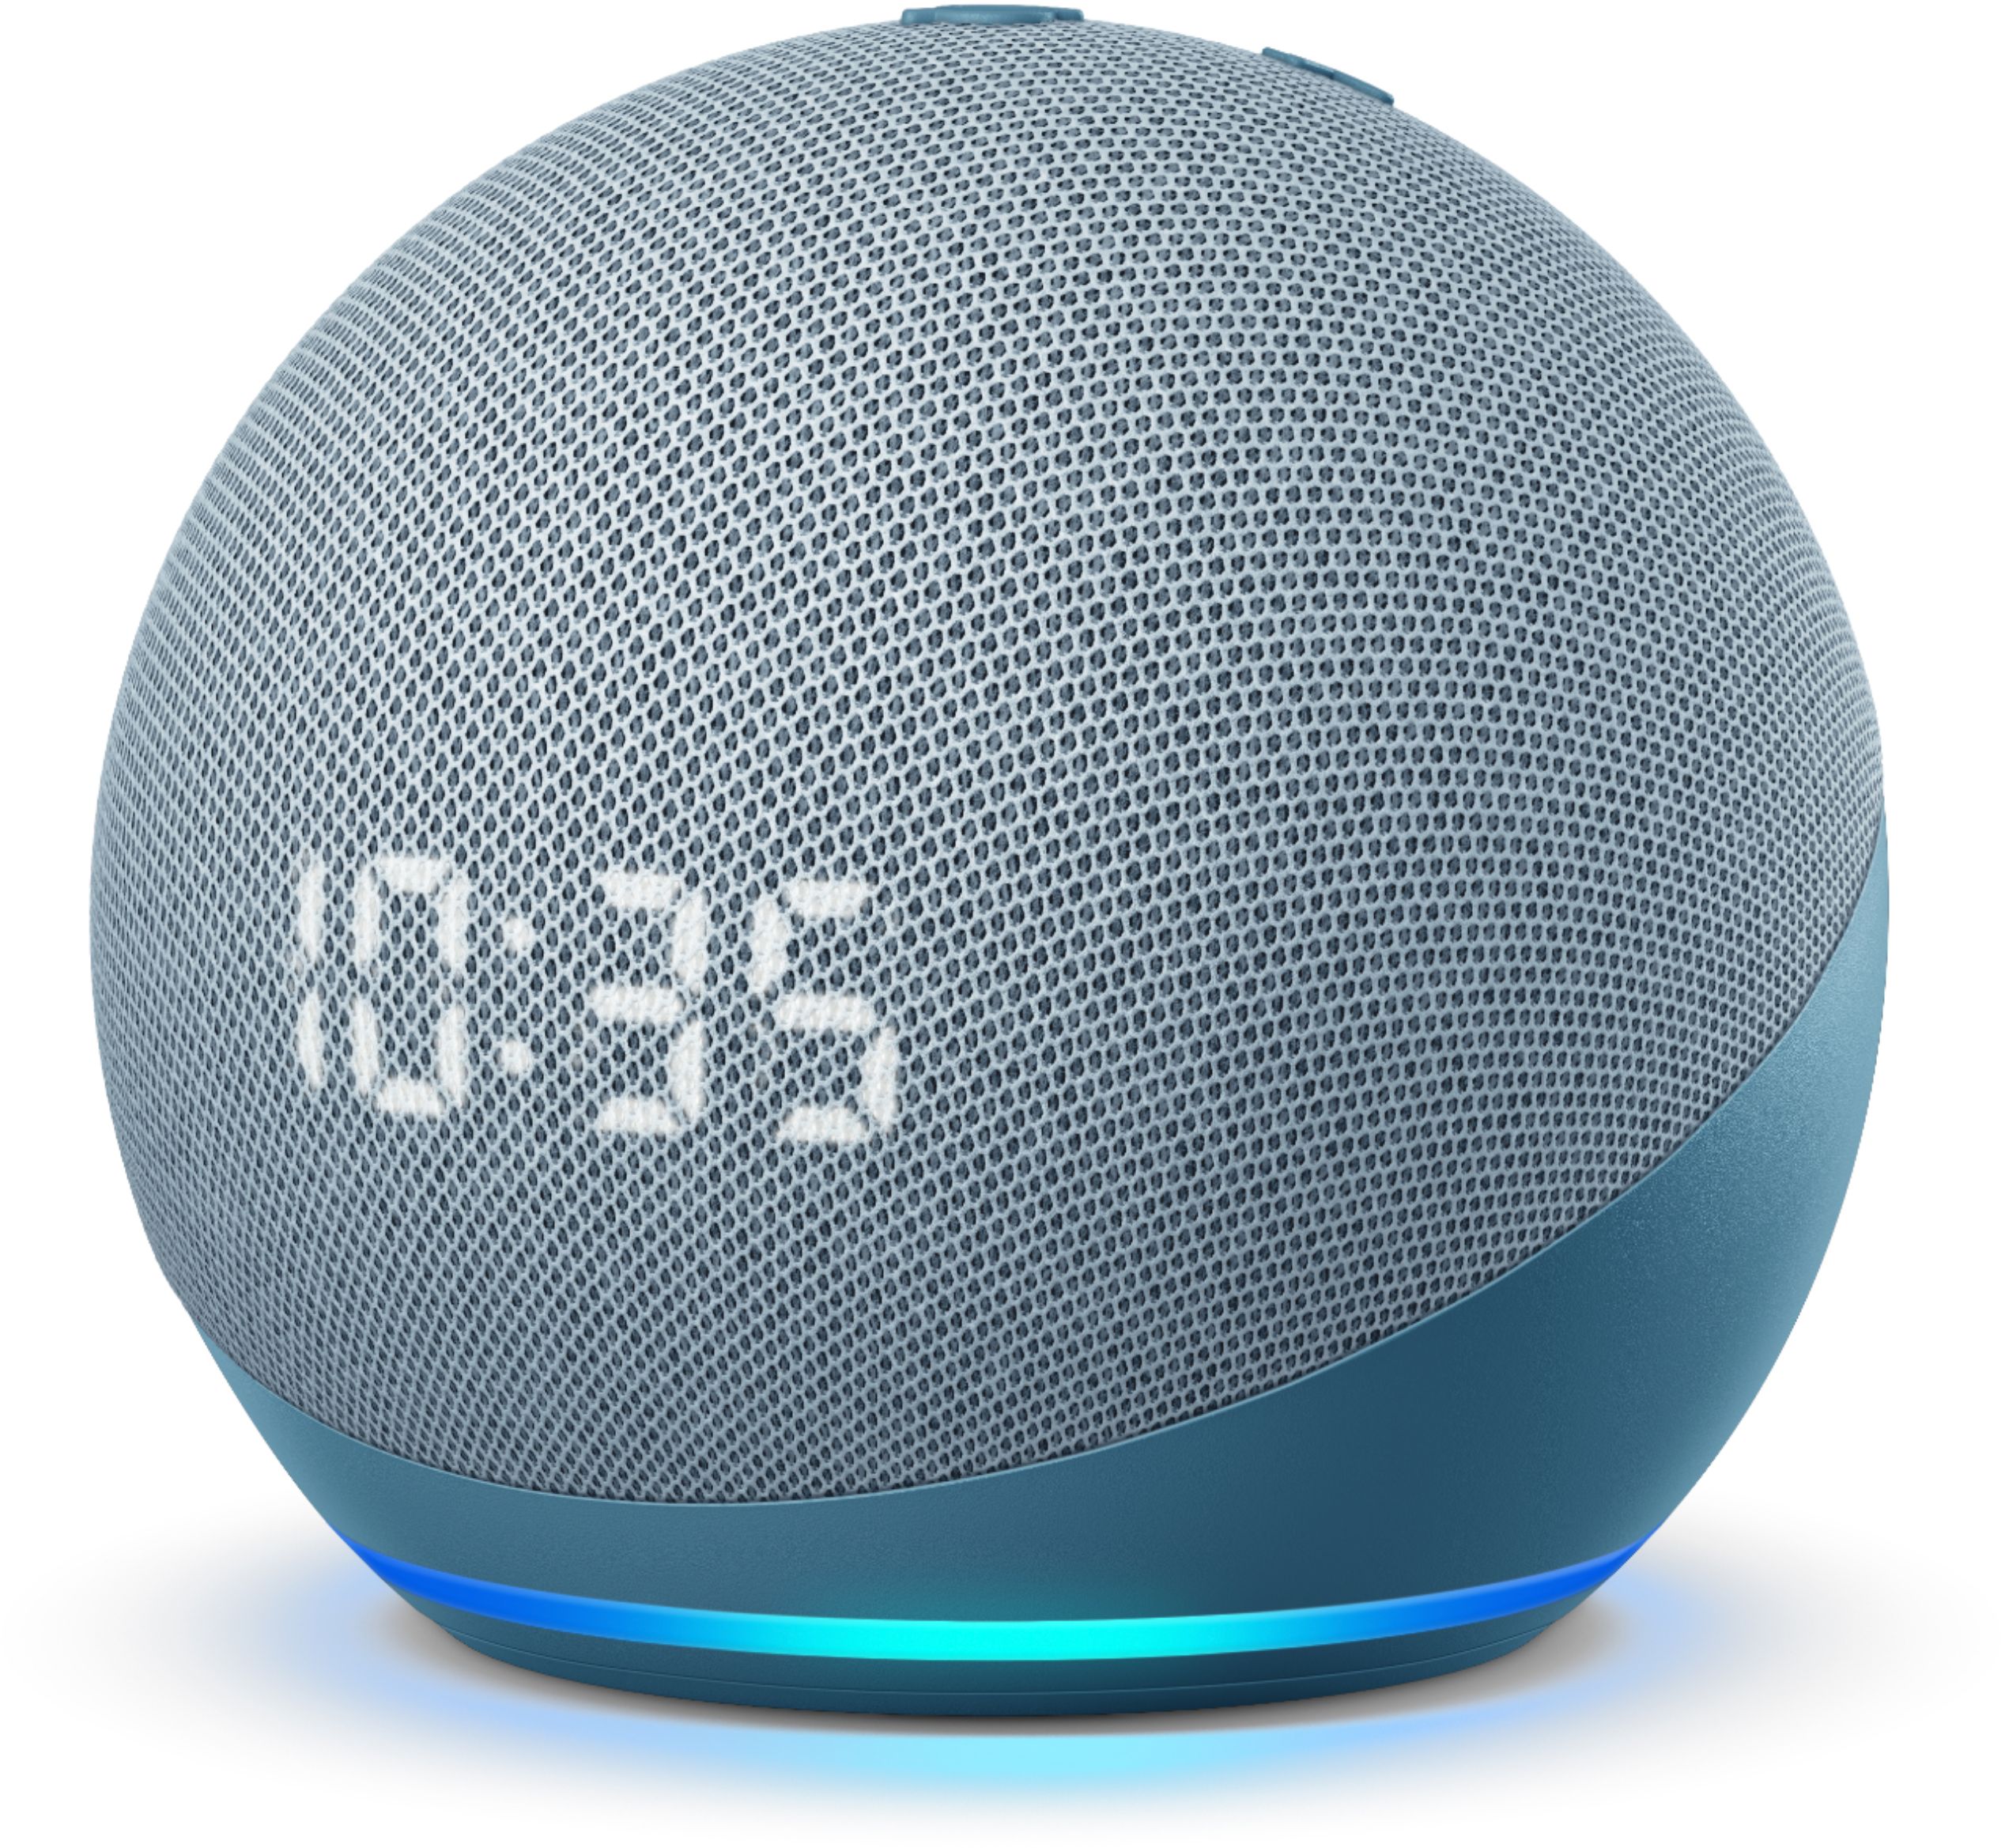 Haiku Lake Taupo Macadam Best Buy: Amazon Echo Dot (4th Gen) Smart speaker with clock and Alexa  Twilight Blue B085M66LH1